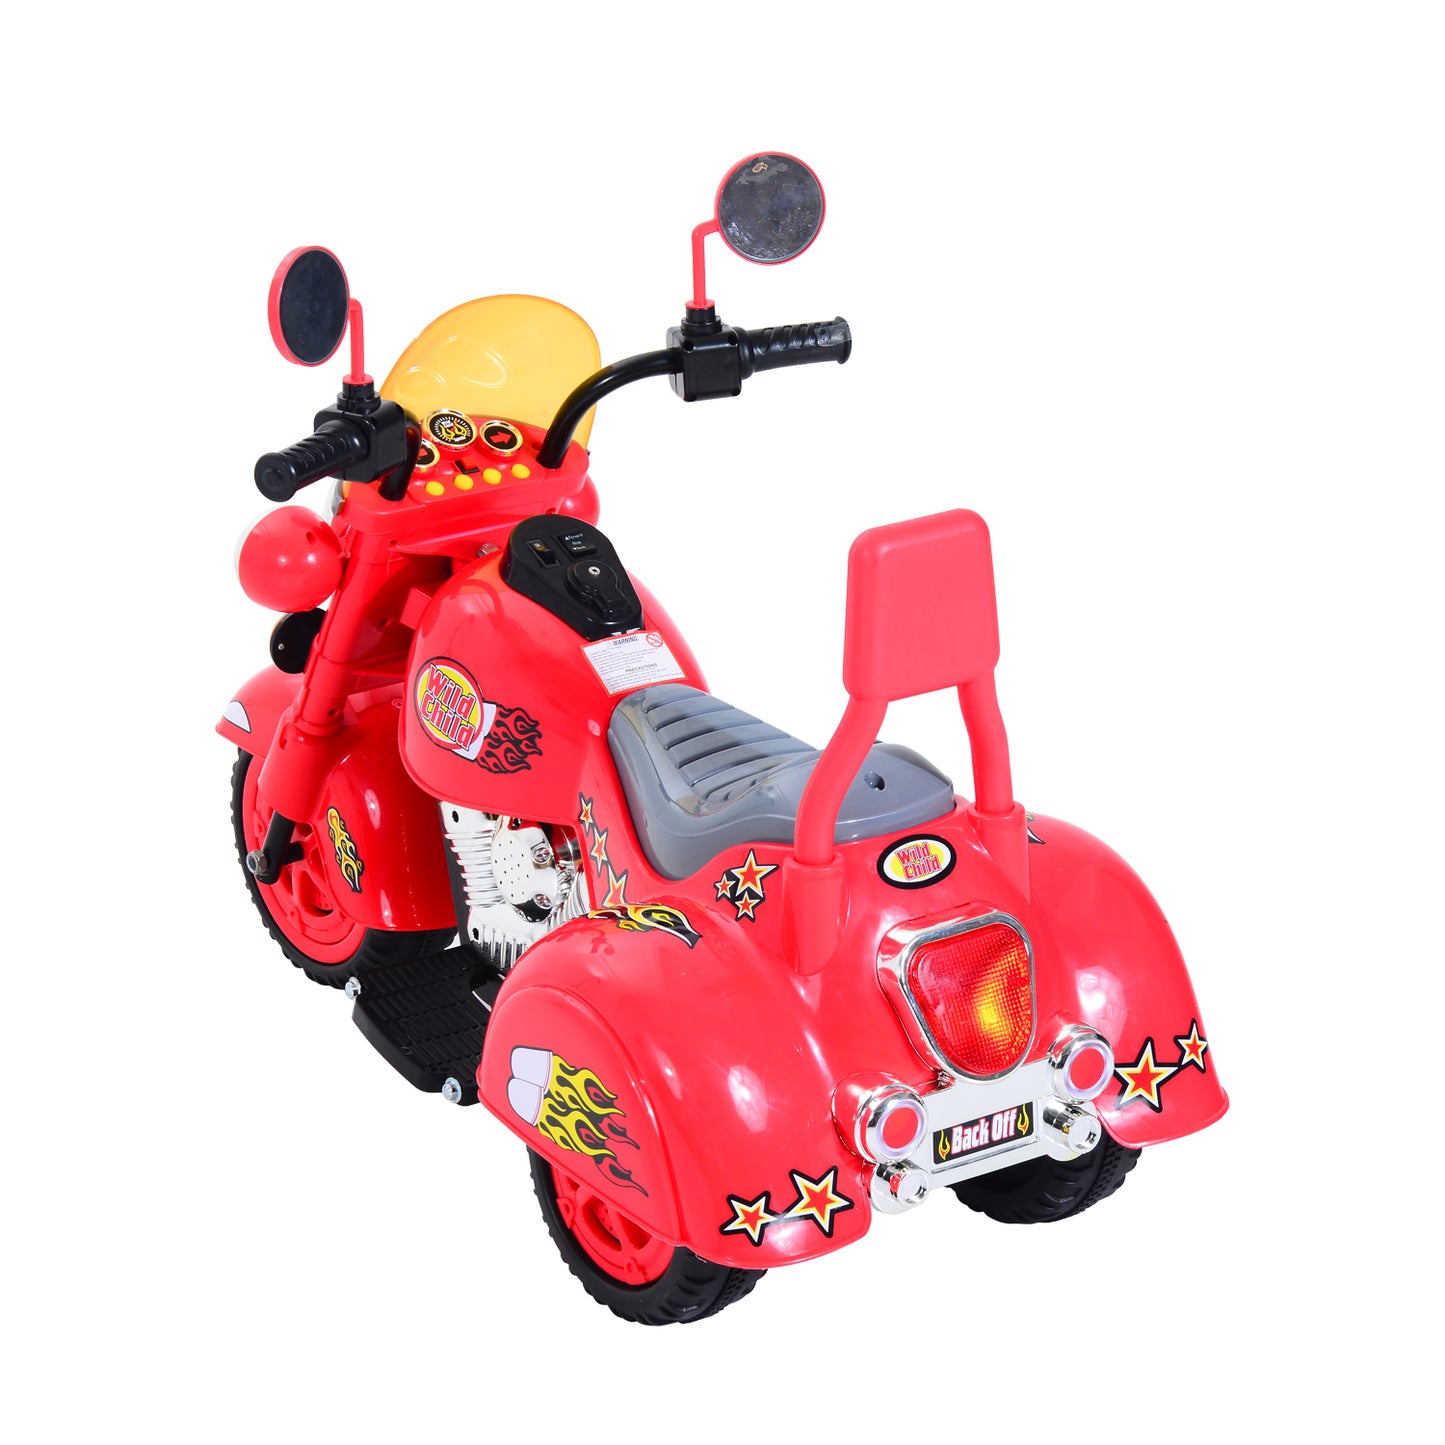 HOMCOM Kids Ride On Kids Electric Motorcycle, 6V-Red